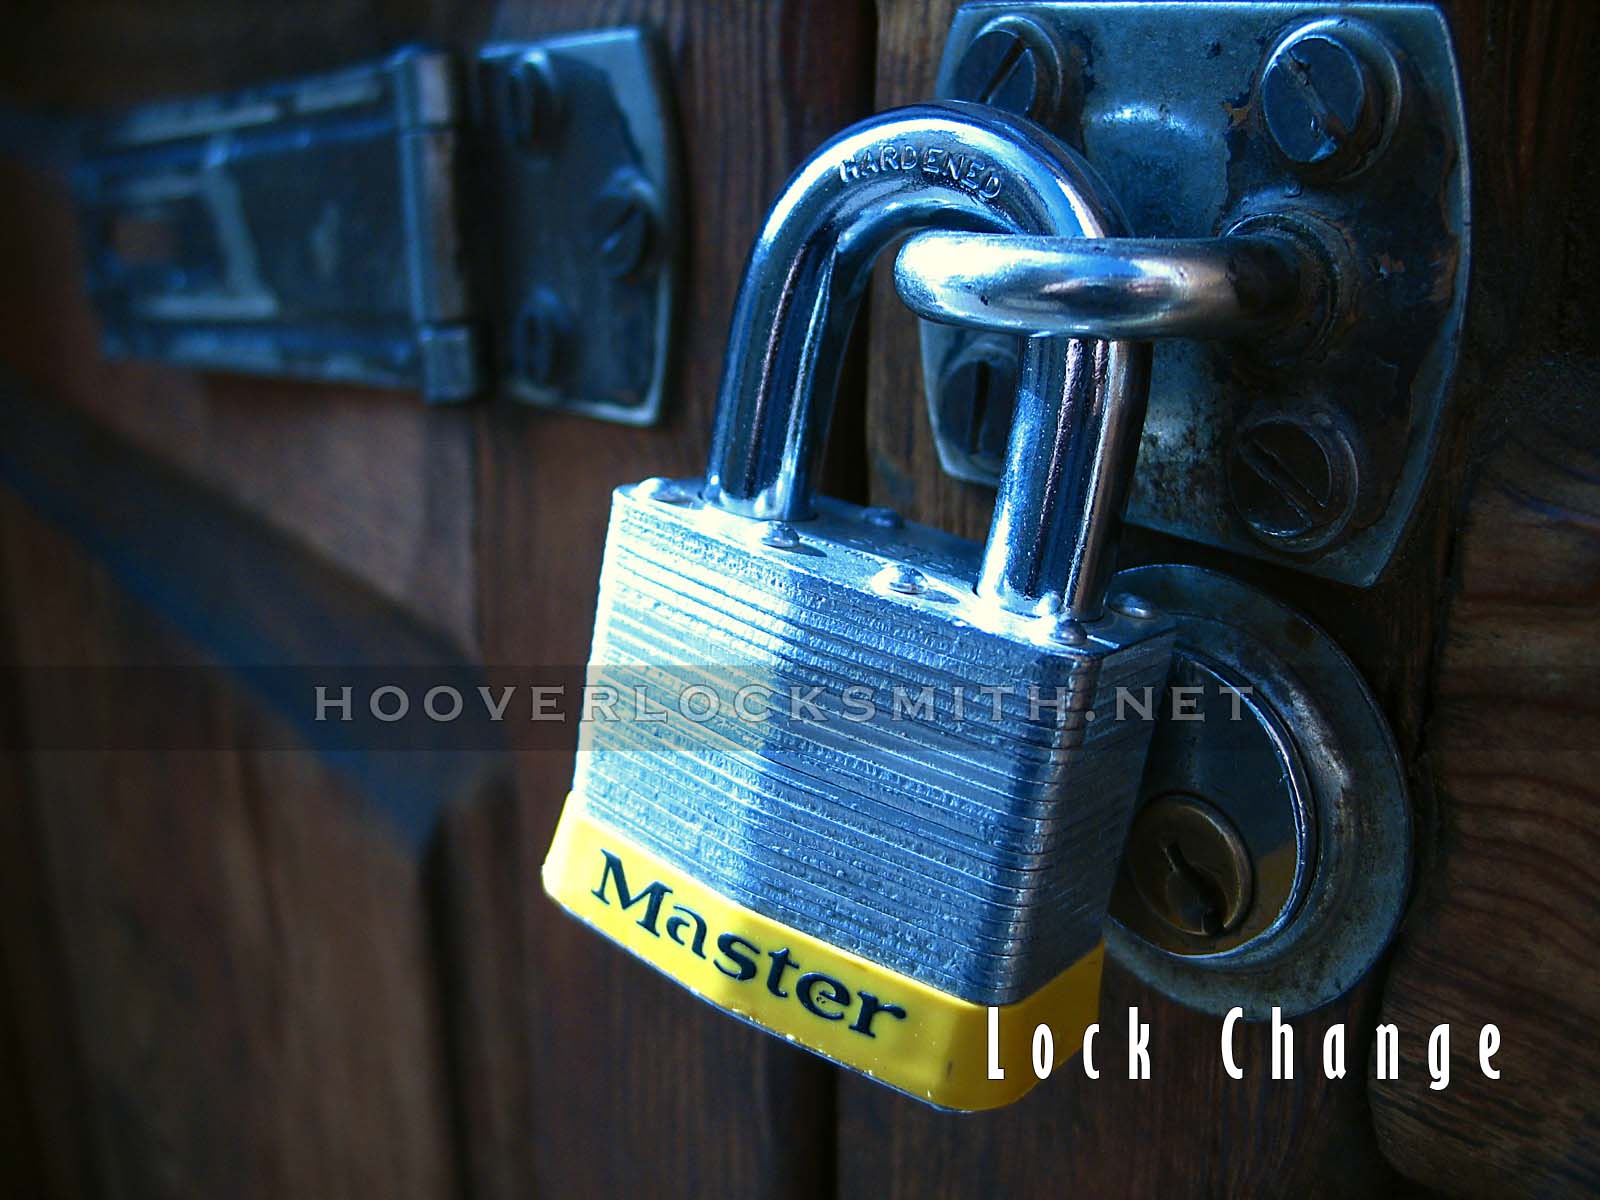 Hoover-locksmith-lock-change